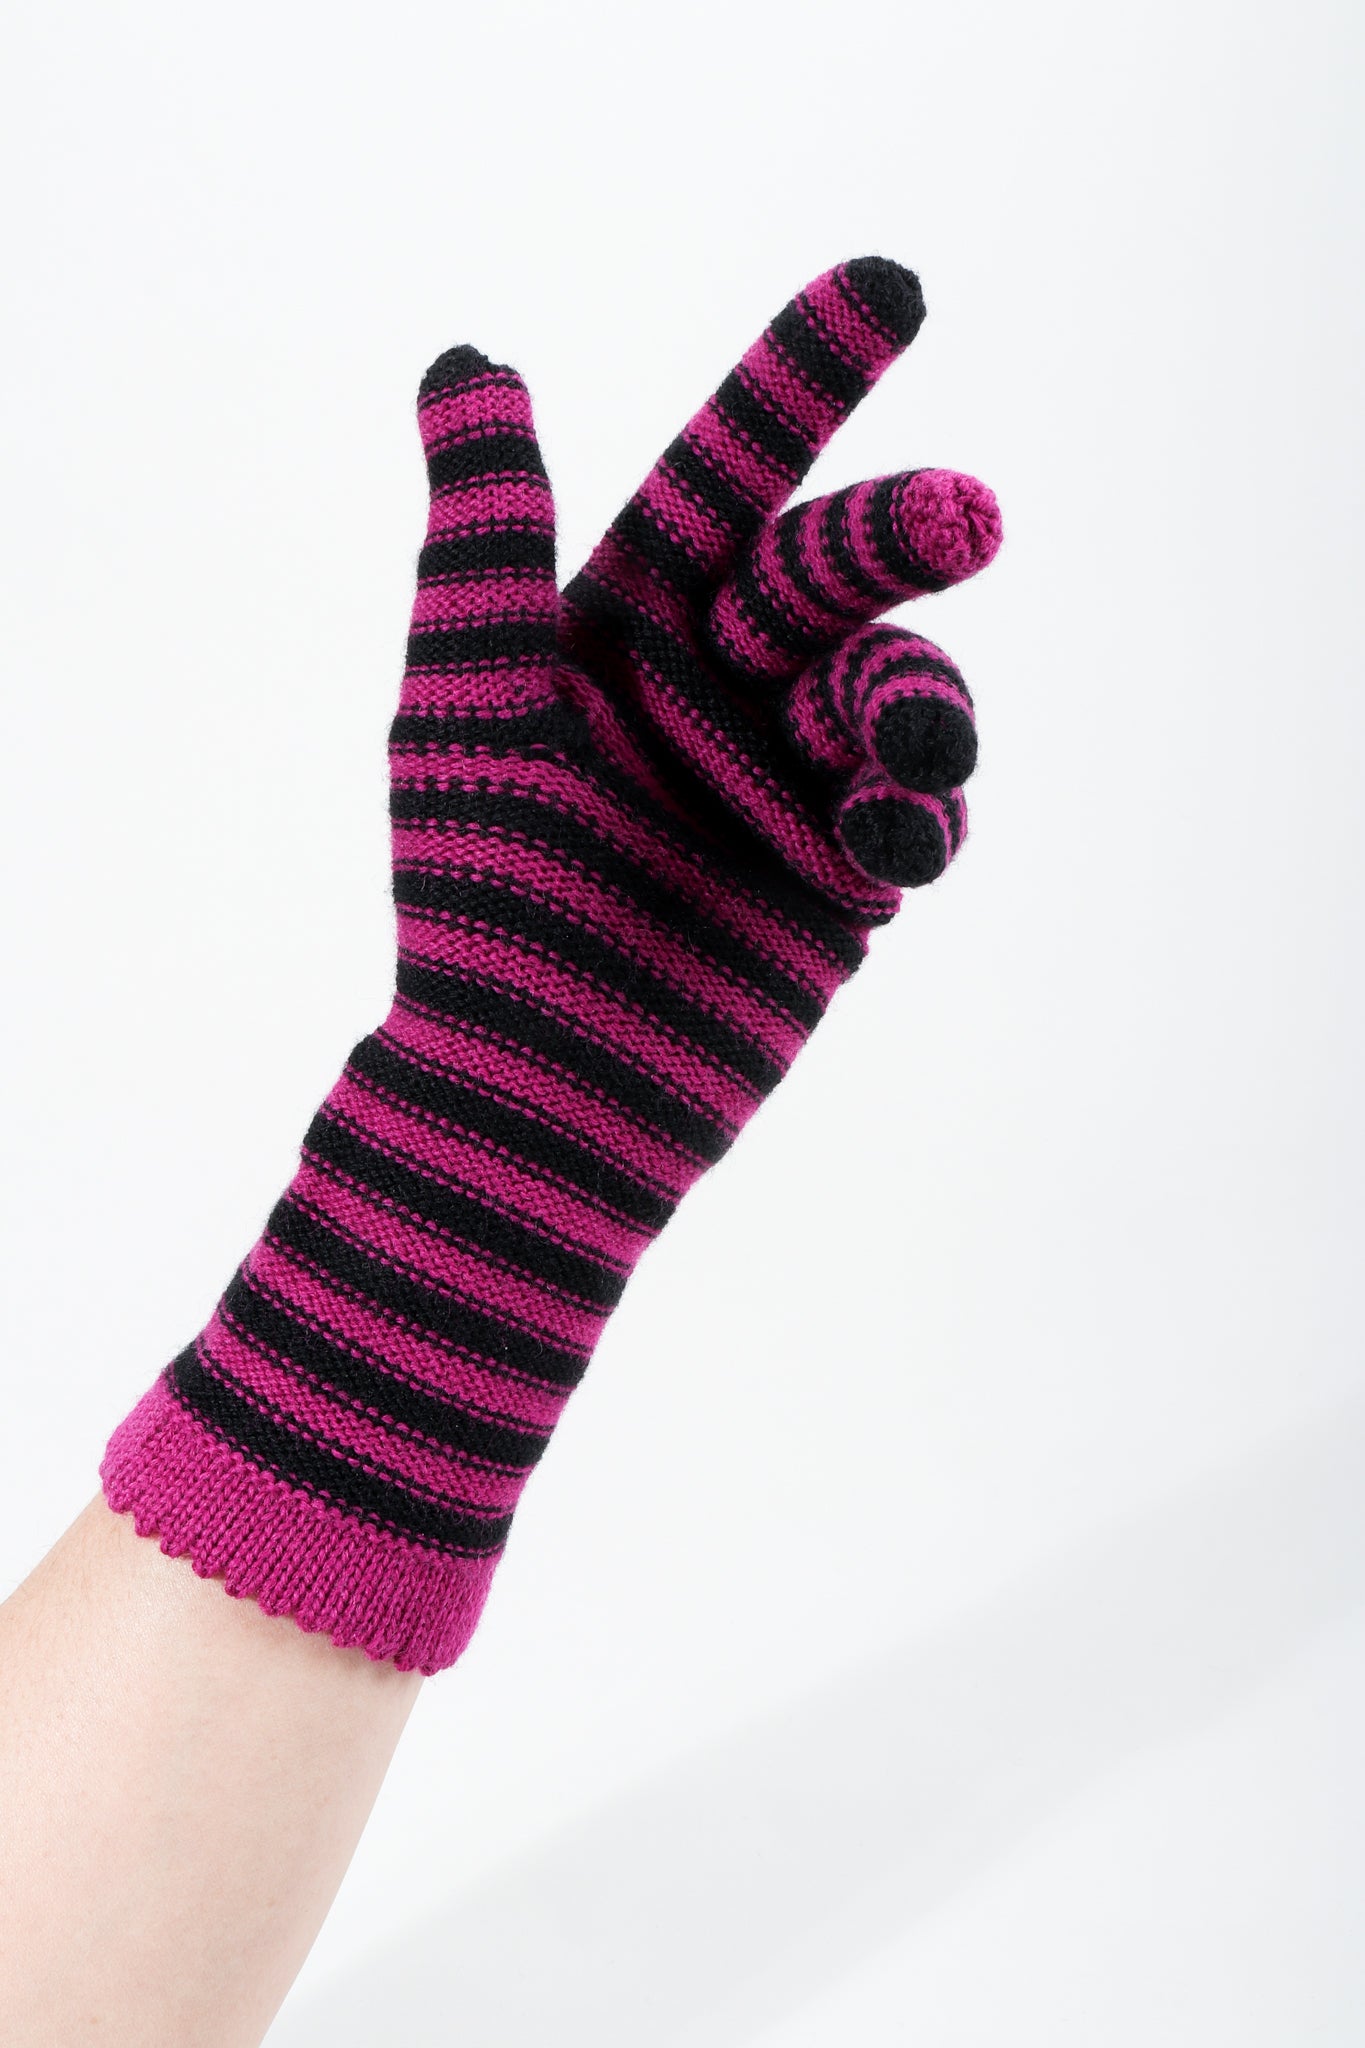 Vintage Sonia Rykiel Fuchsia Stripe Knit Gloves on hand curled